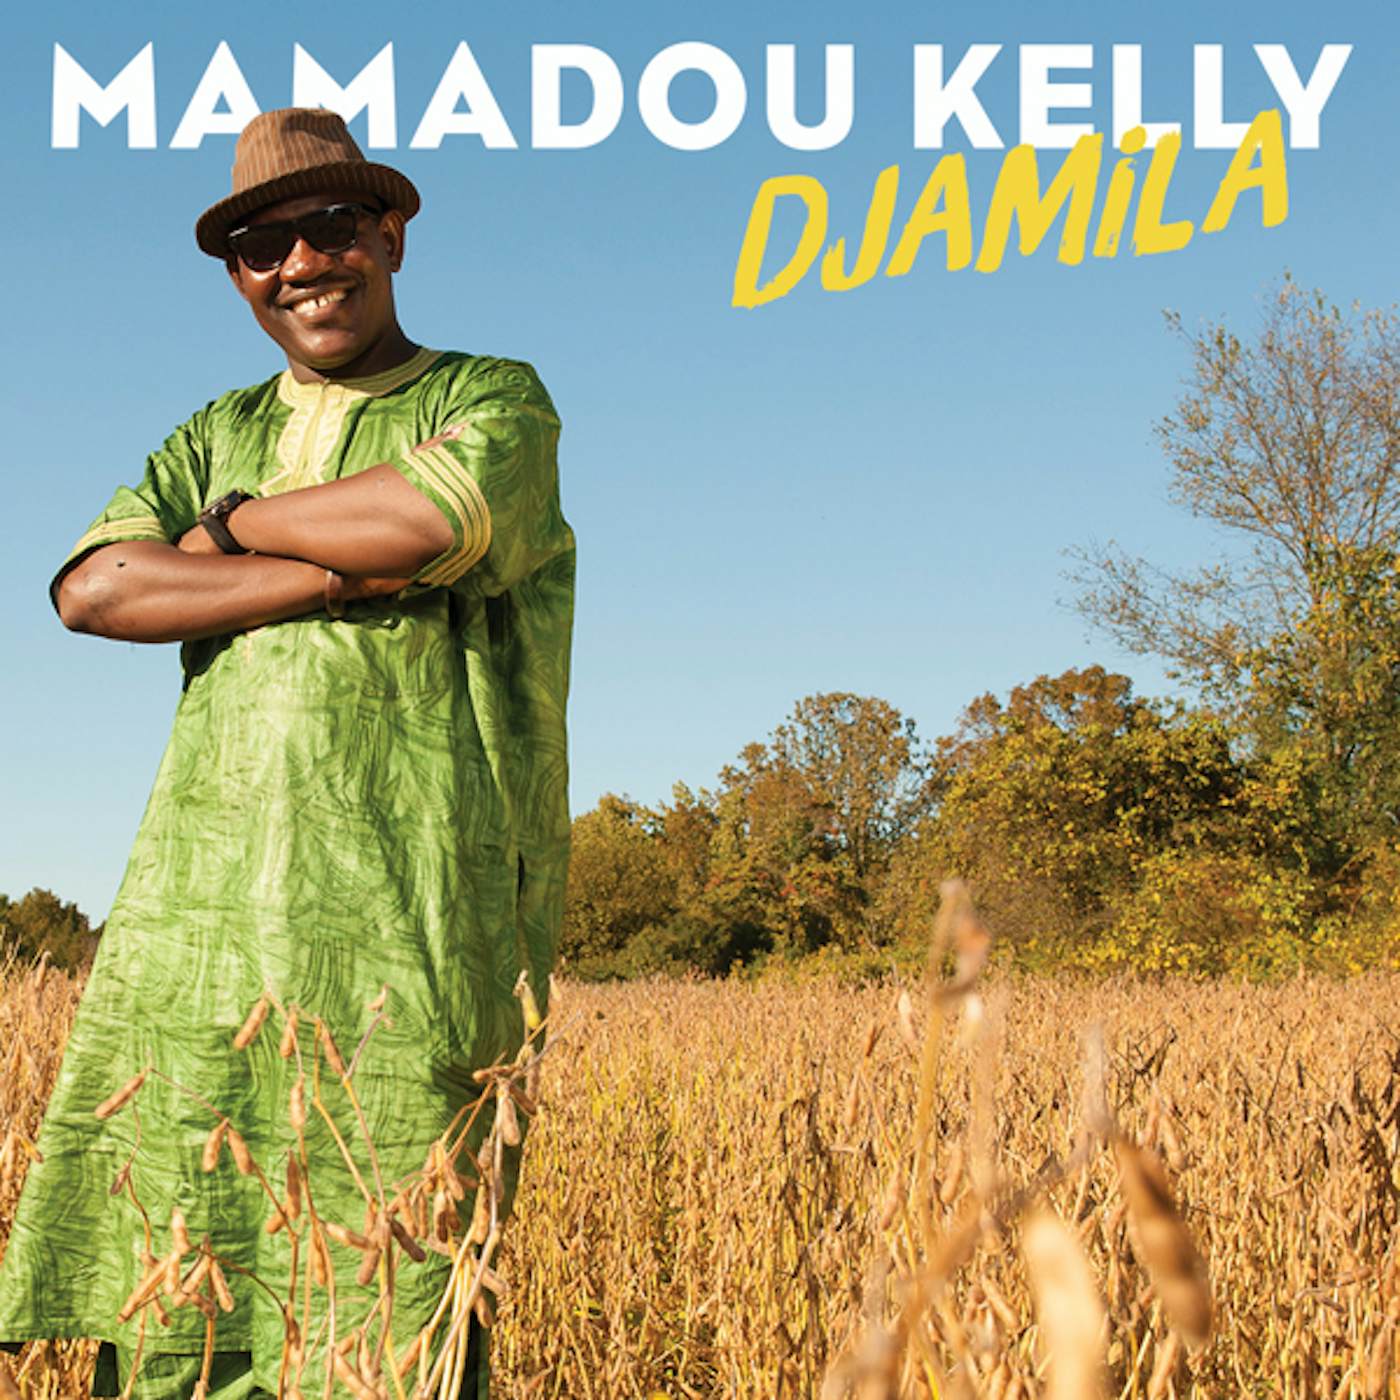 Mamadou Kelly Djamila Vinyl Record